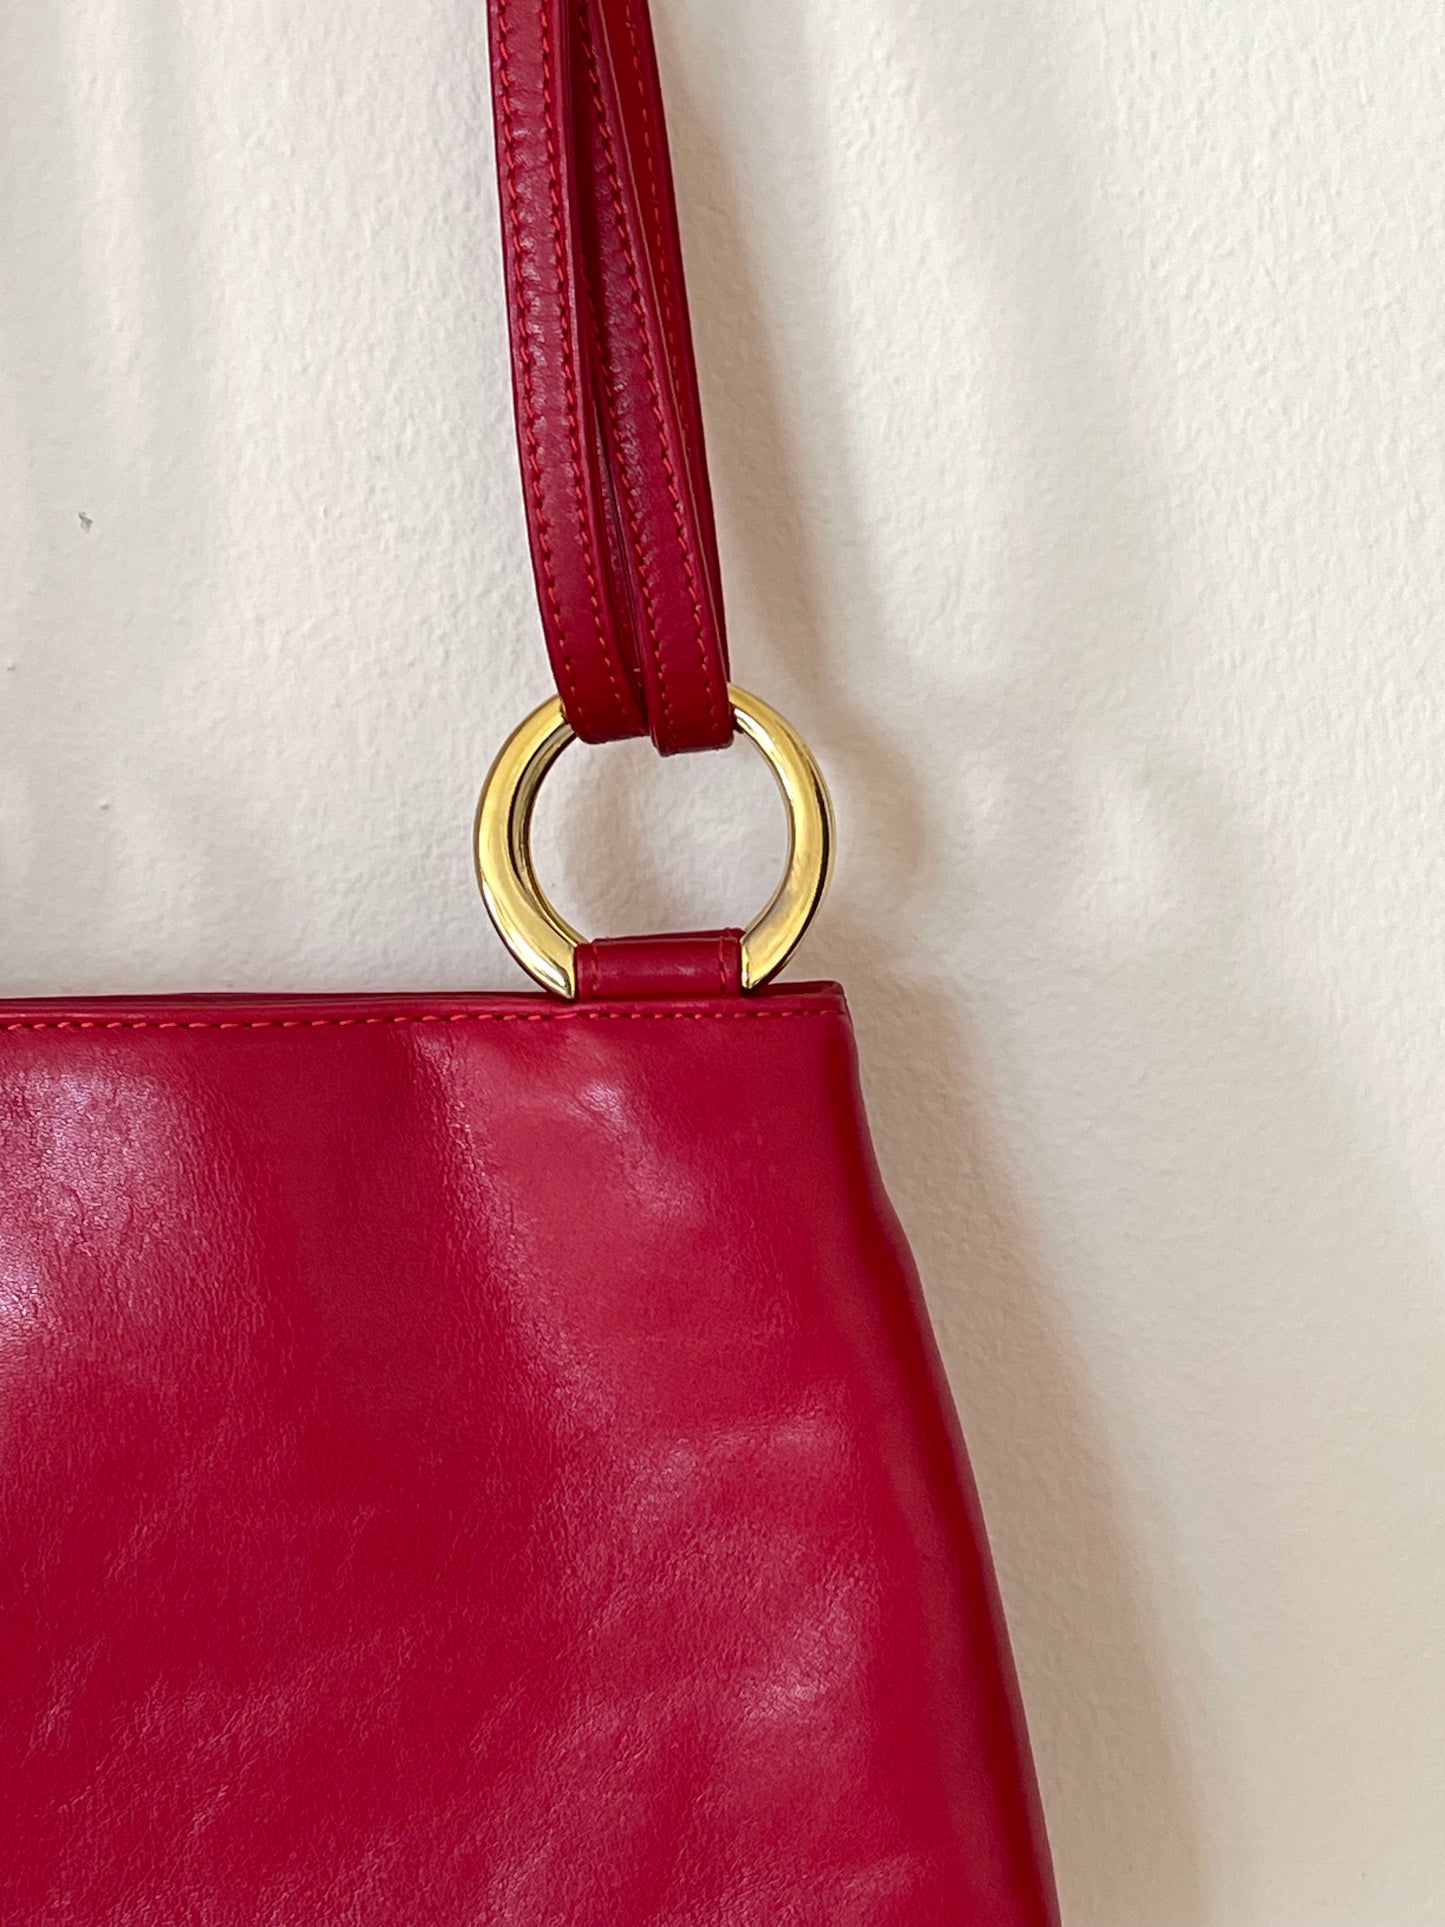 Amazing authentic vintage leather bag Bally